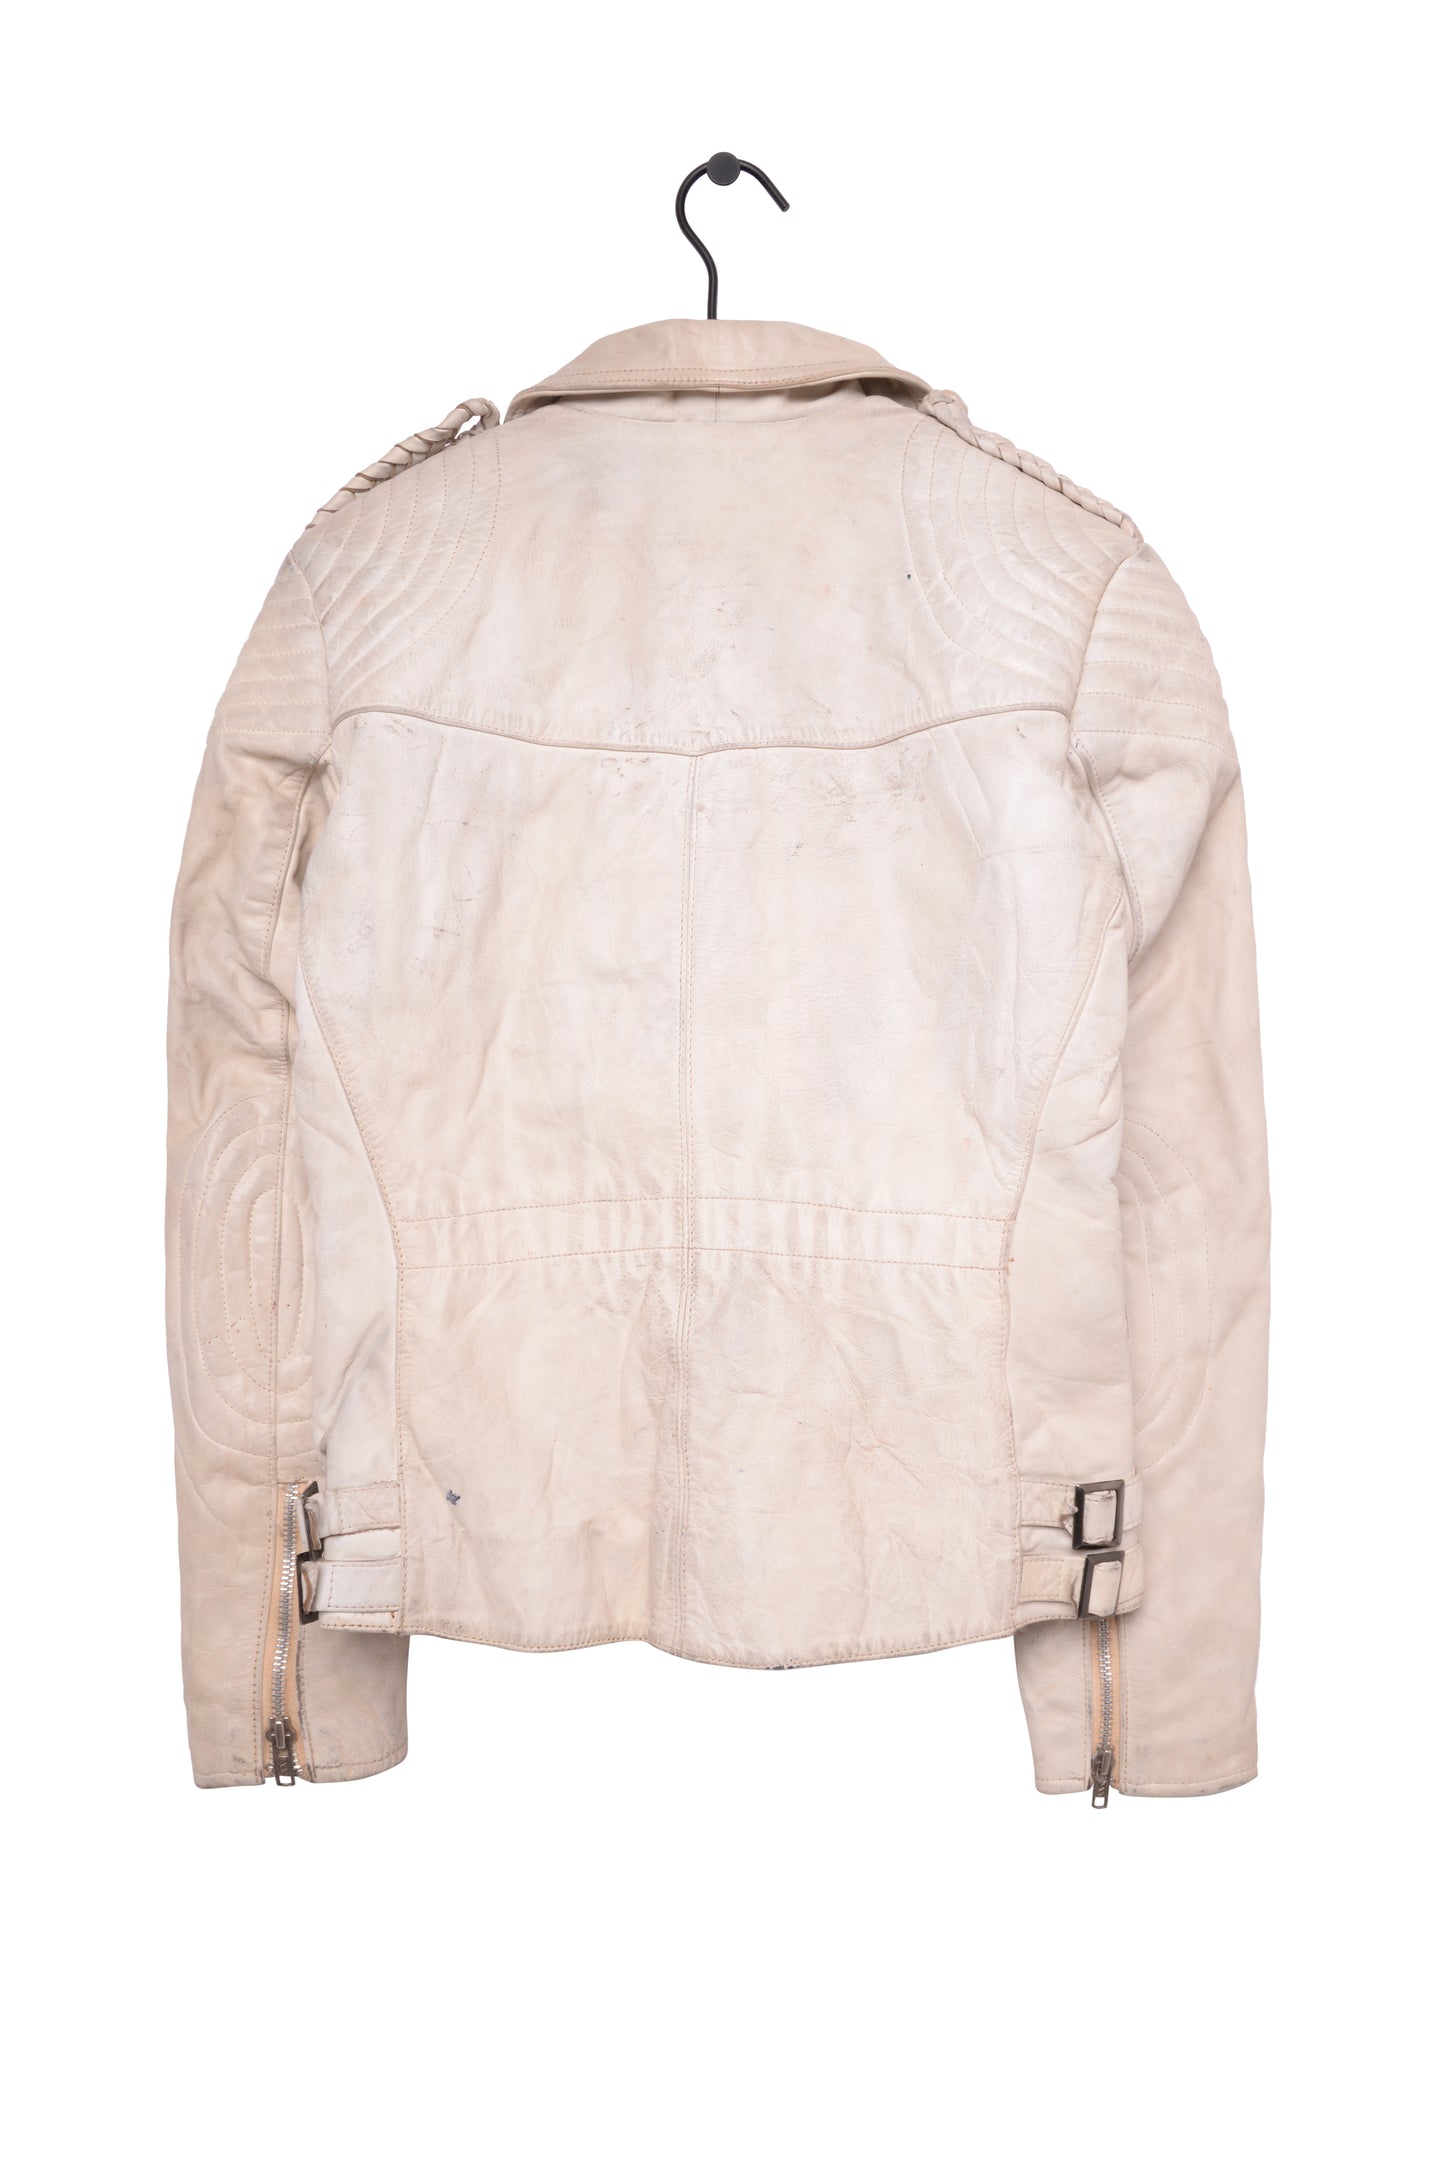 1970s Cream Leather Moto Jacket